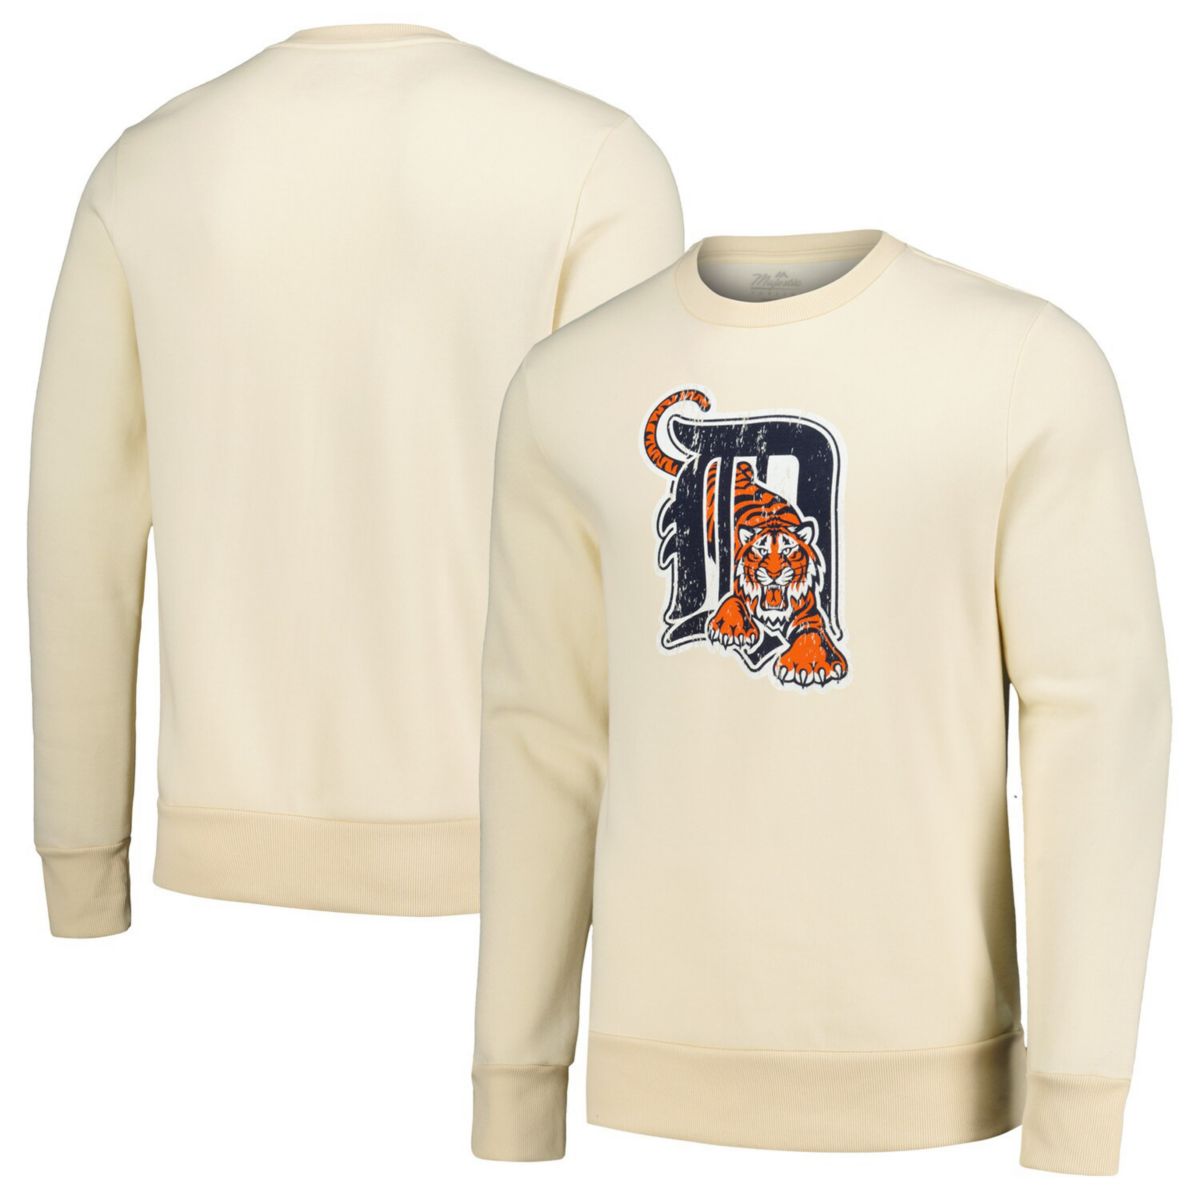 Men's Majestic Threads Oatmeal Detroit Tigers Fleece Pullover Sweatshirt Majestic Threads